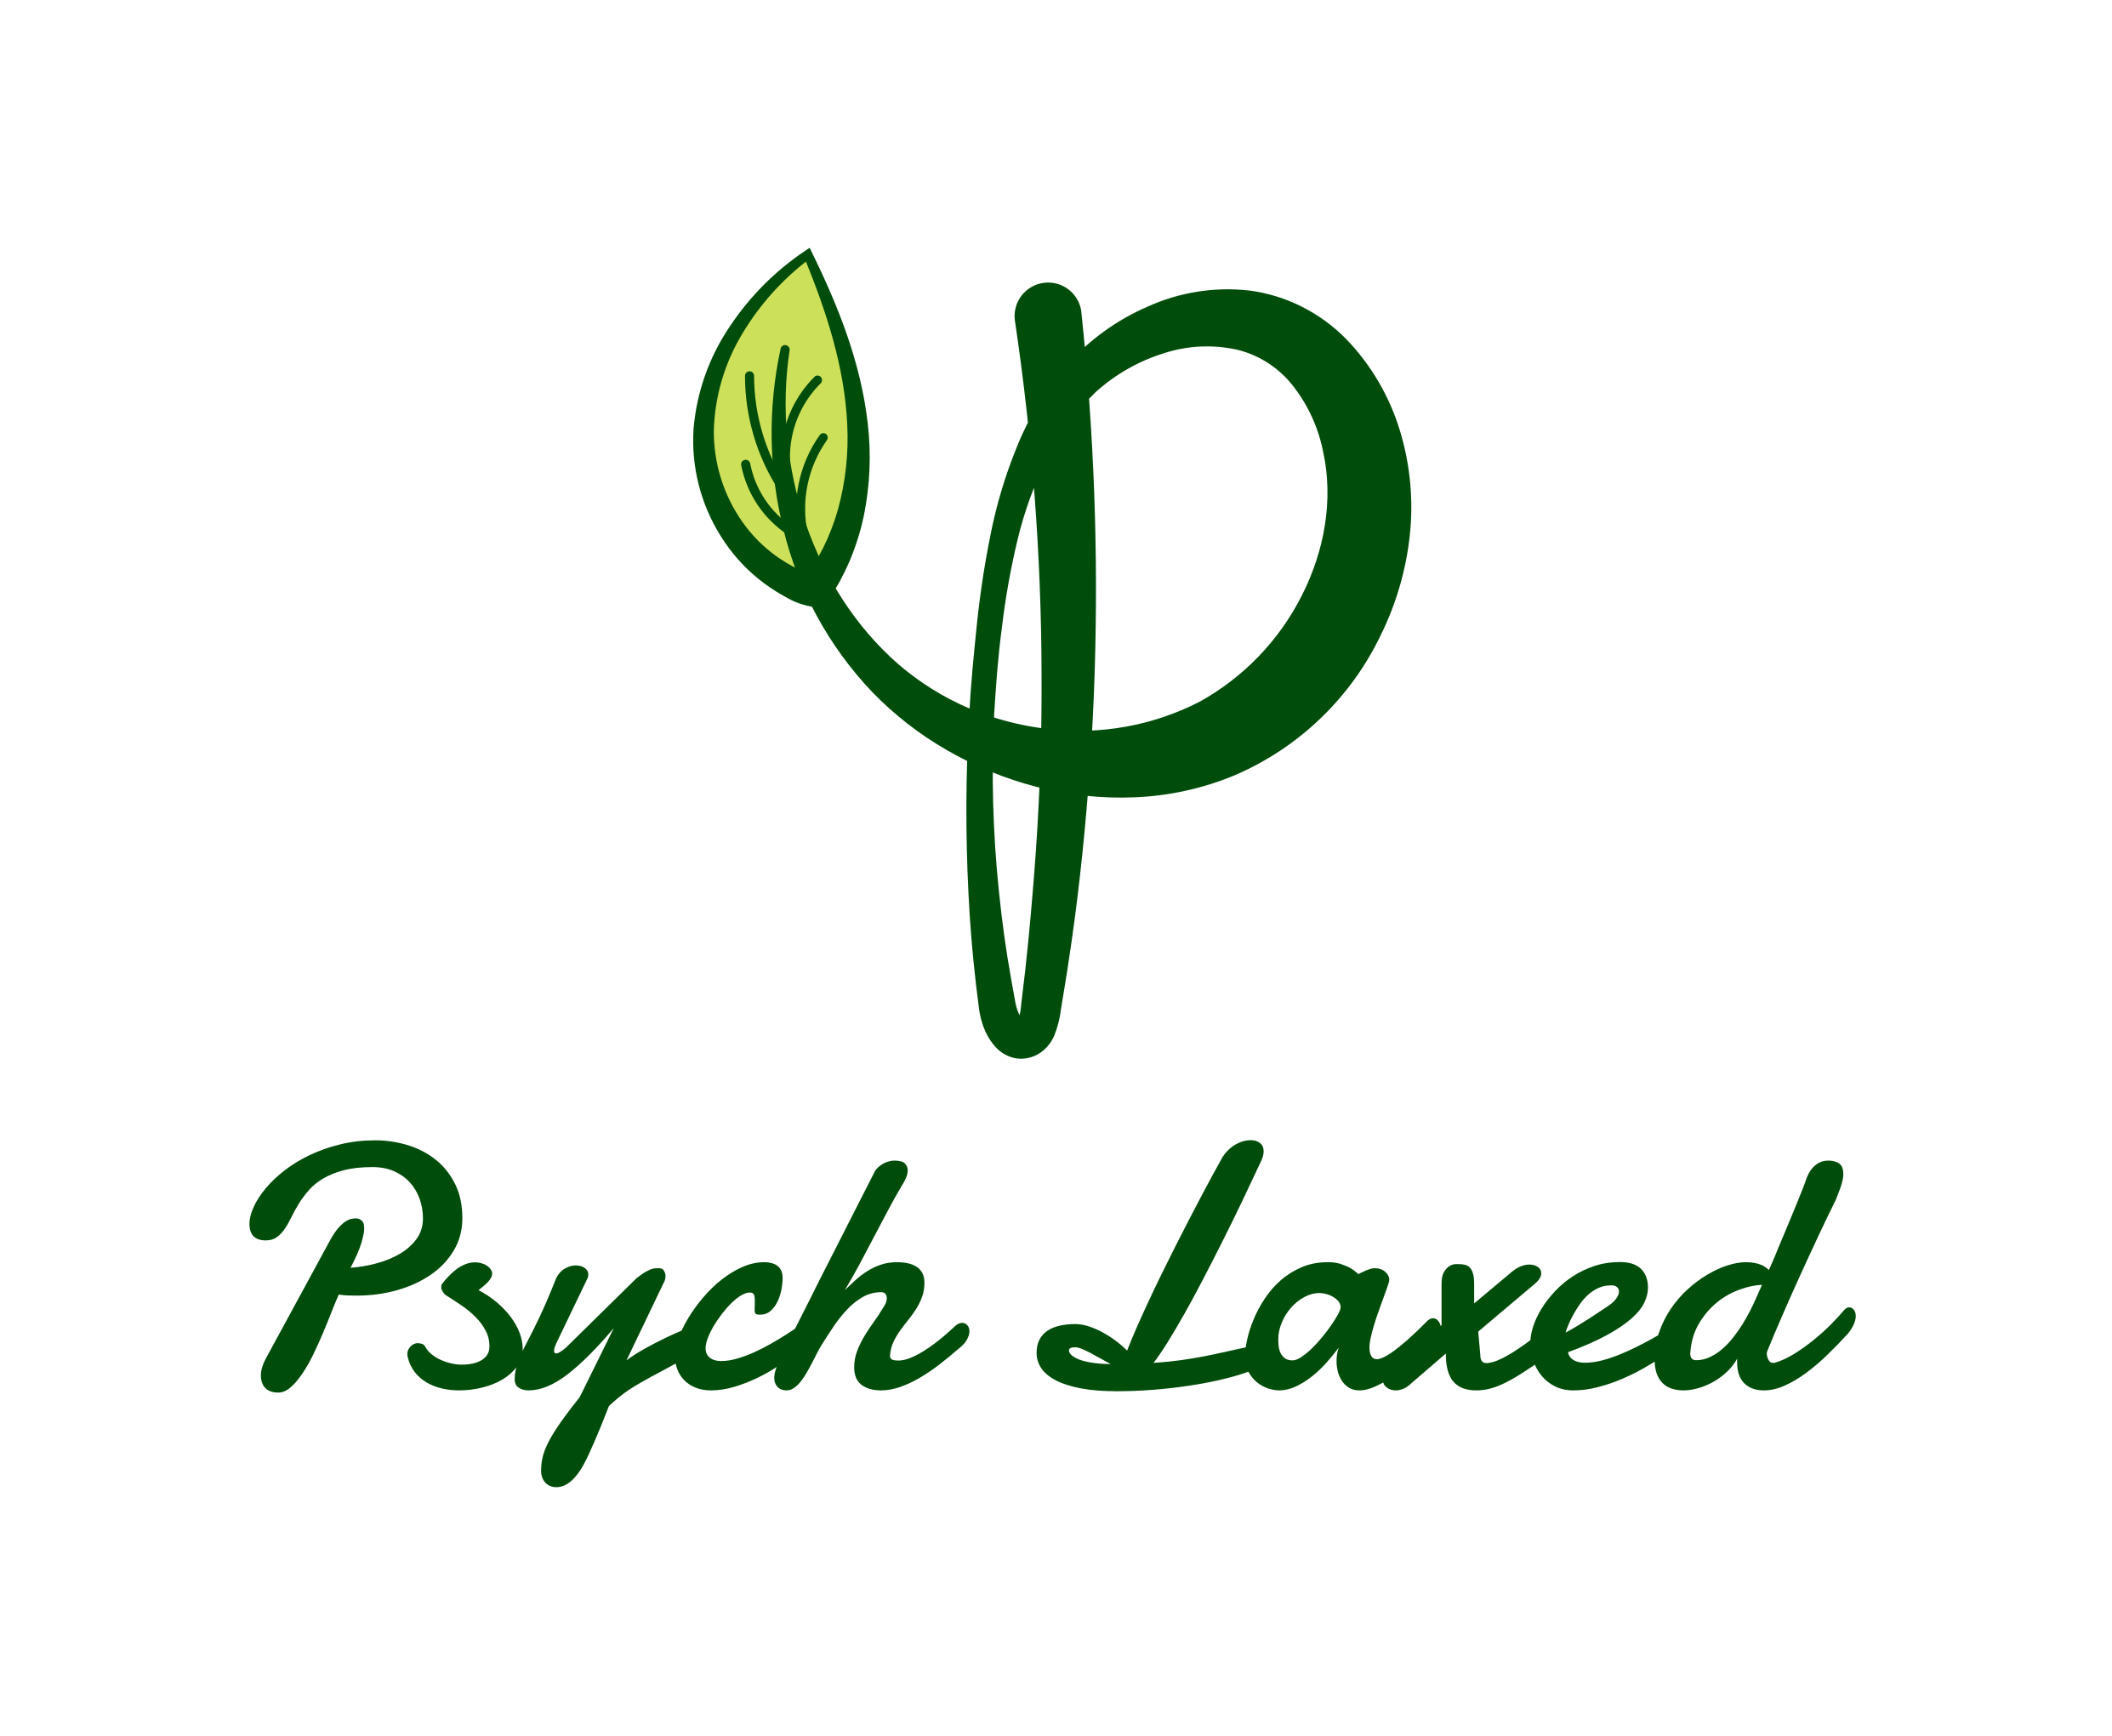 Psych Laxed logo